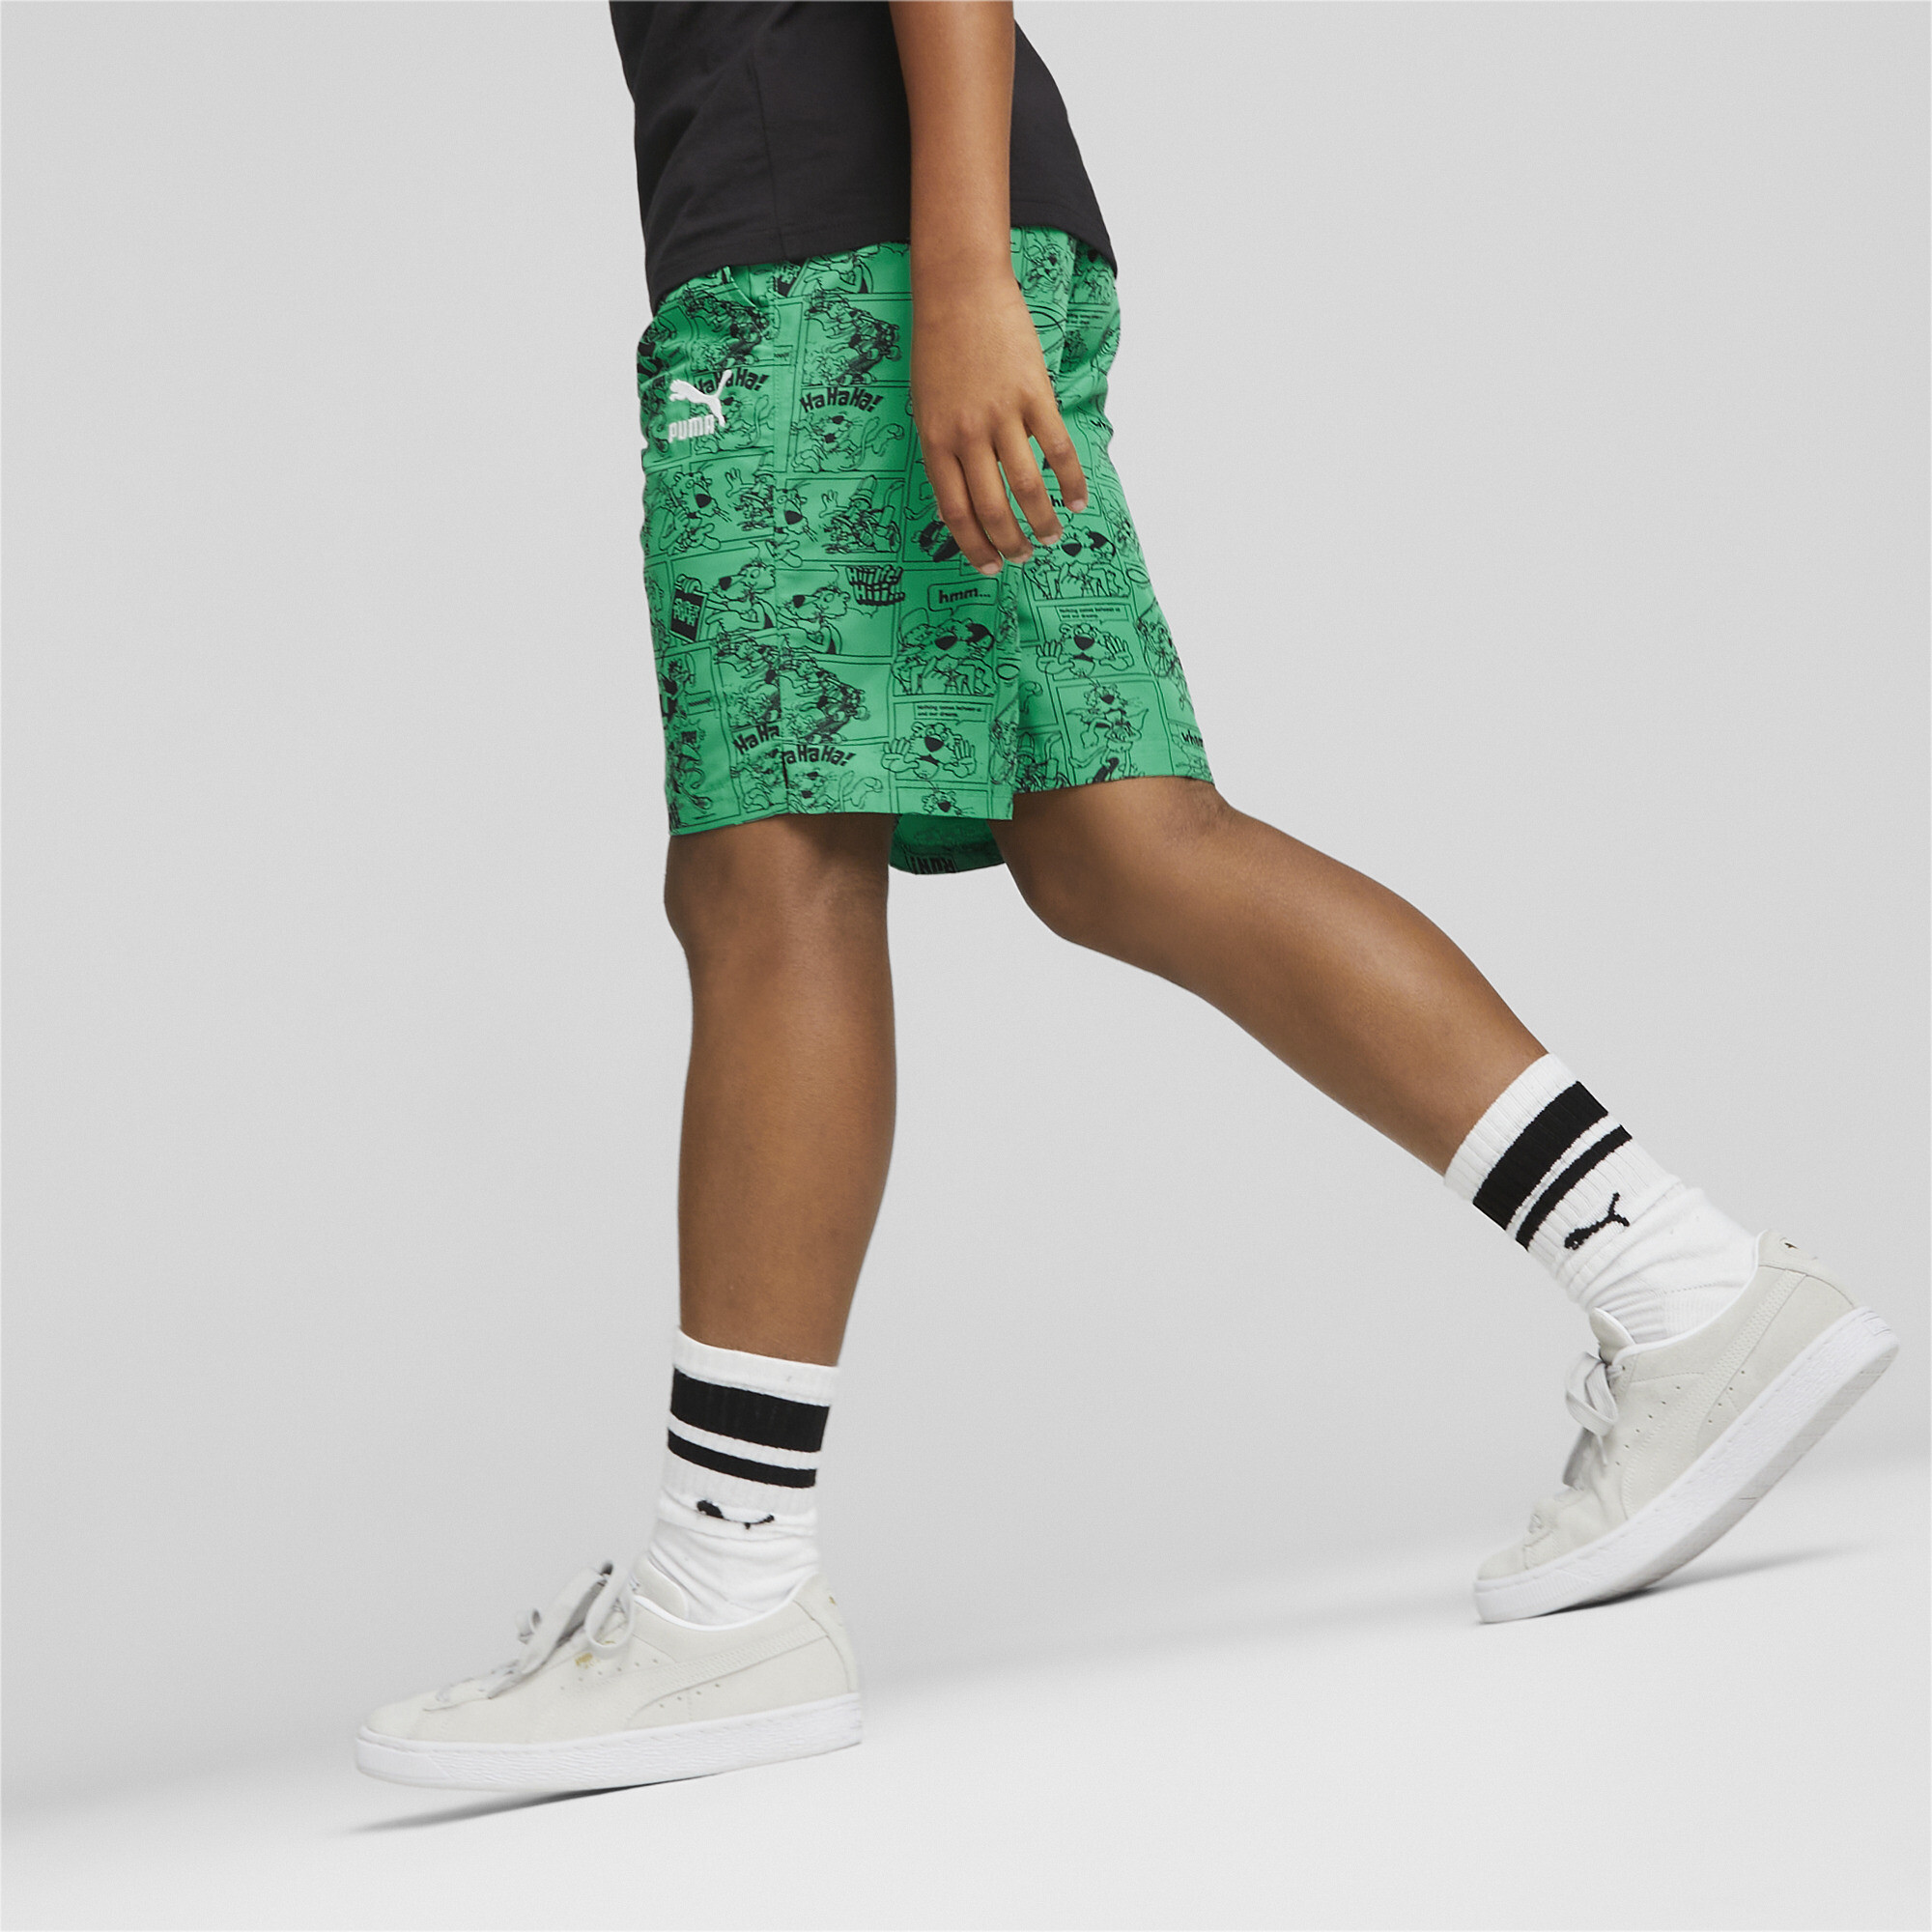 PUMA Classics Super Shorts In Green, Size 3-4 Youth